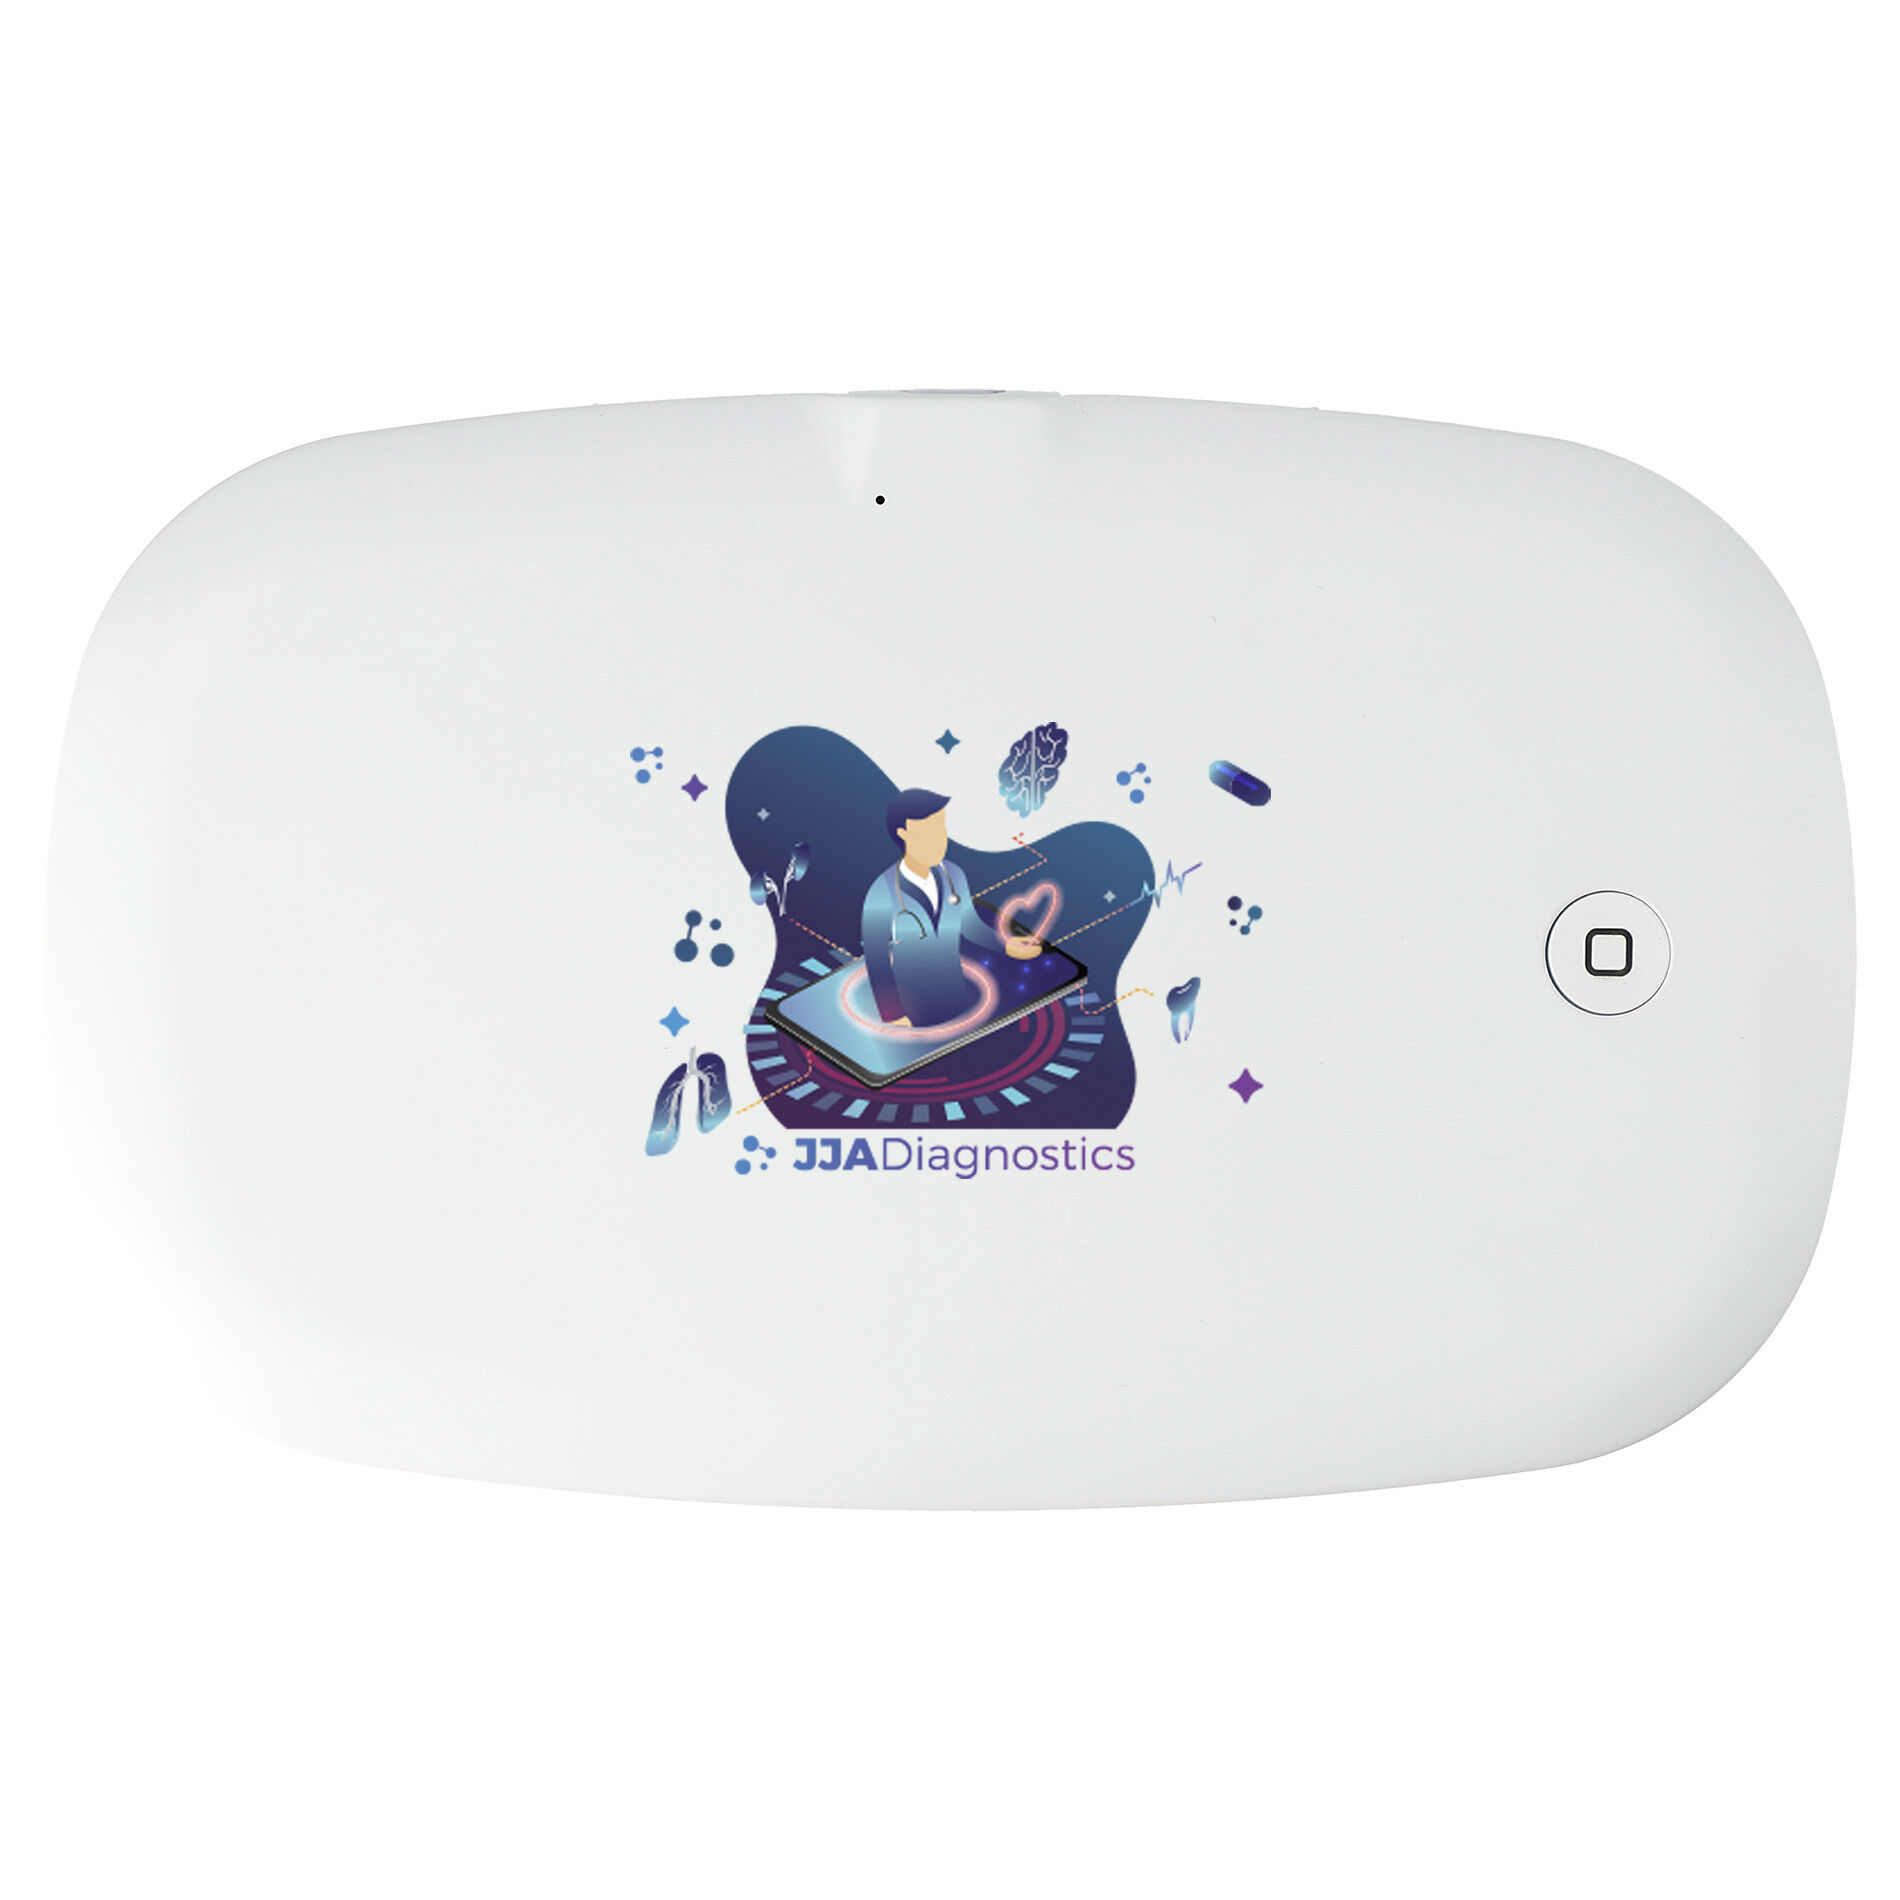 Custom Branded UV Phone Sanitizer with Wireless Charging Pad - White